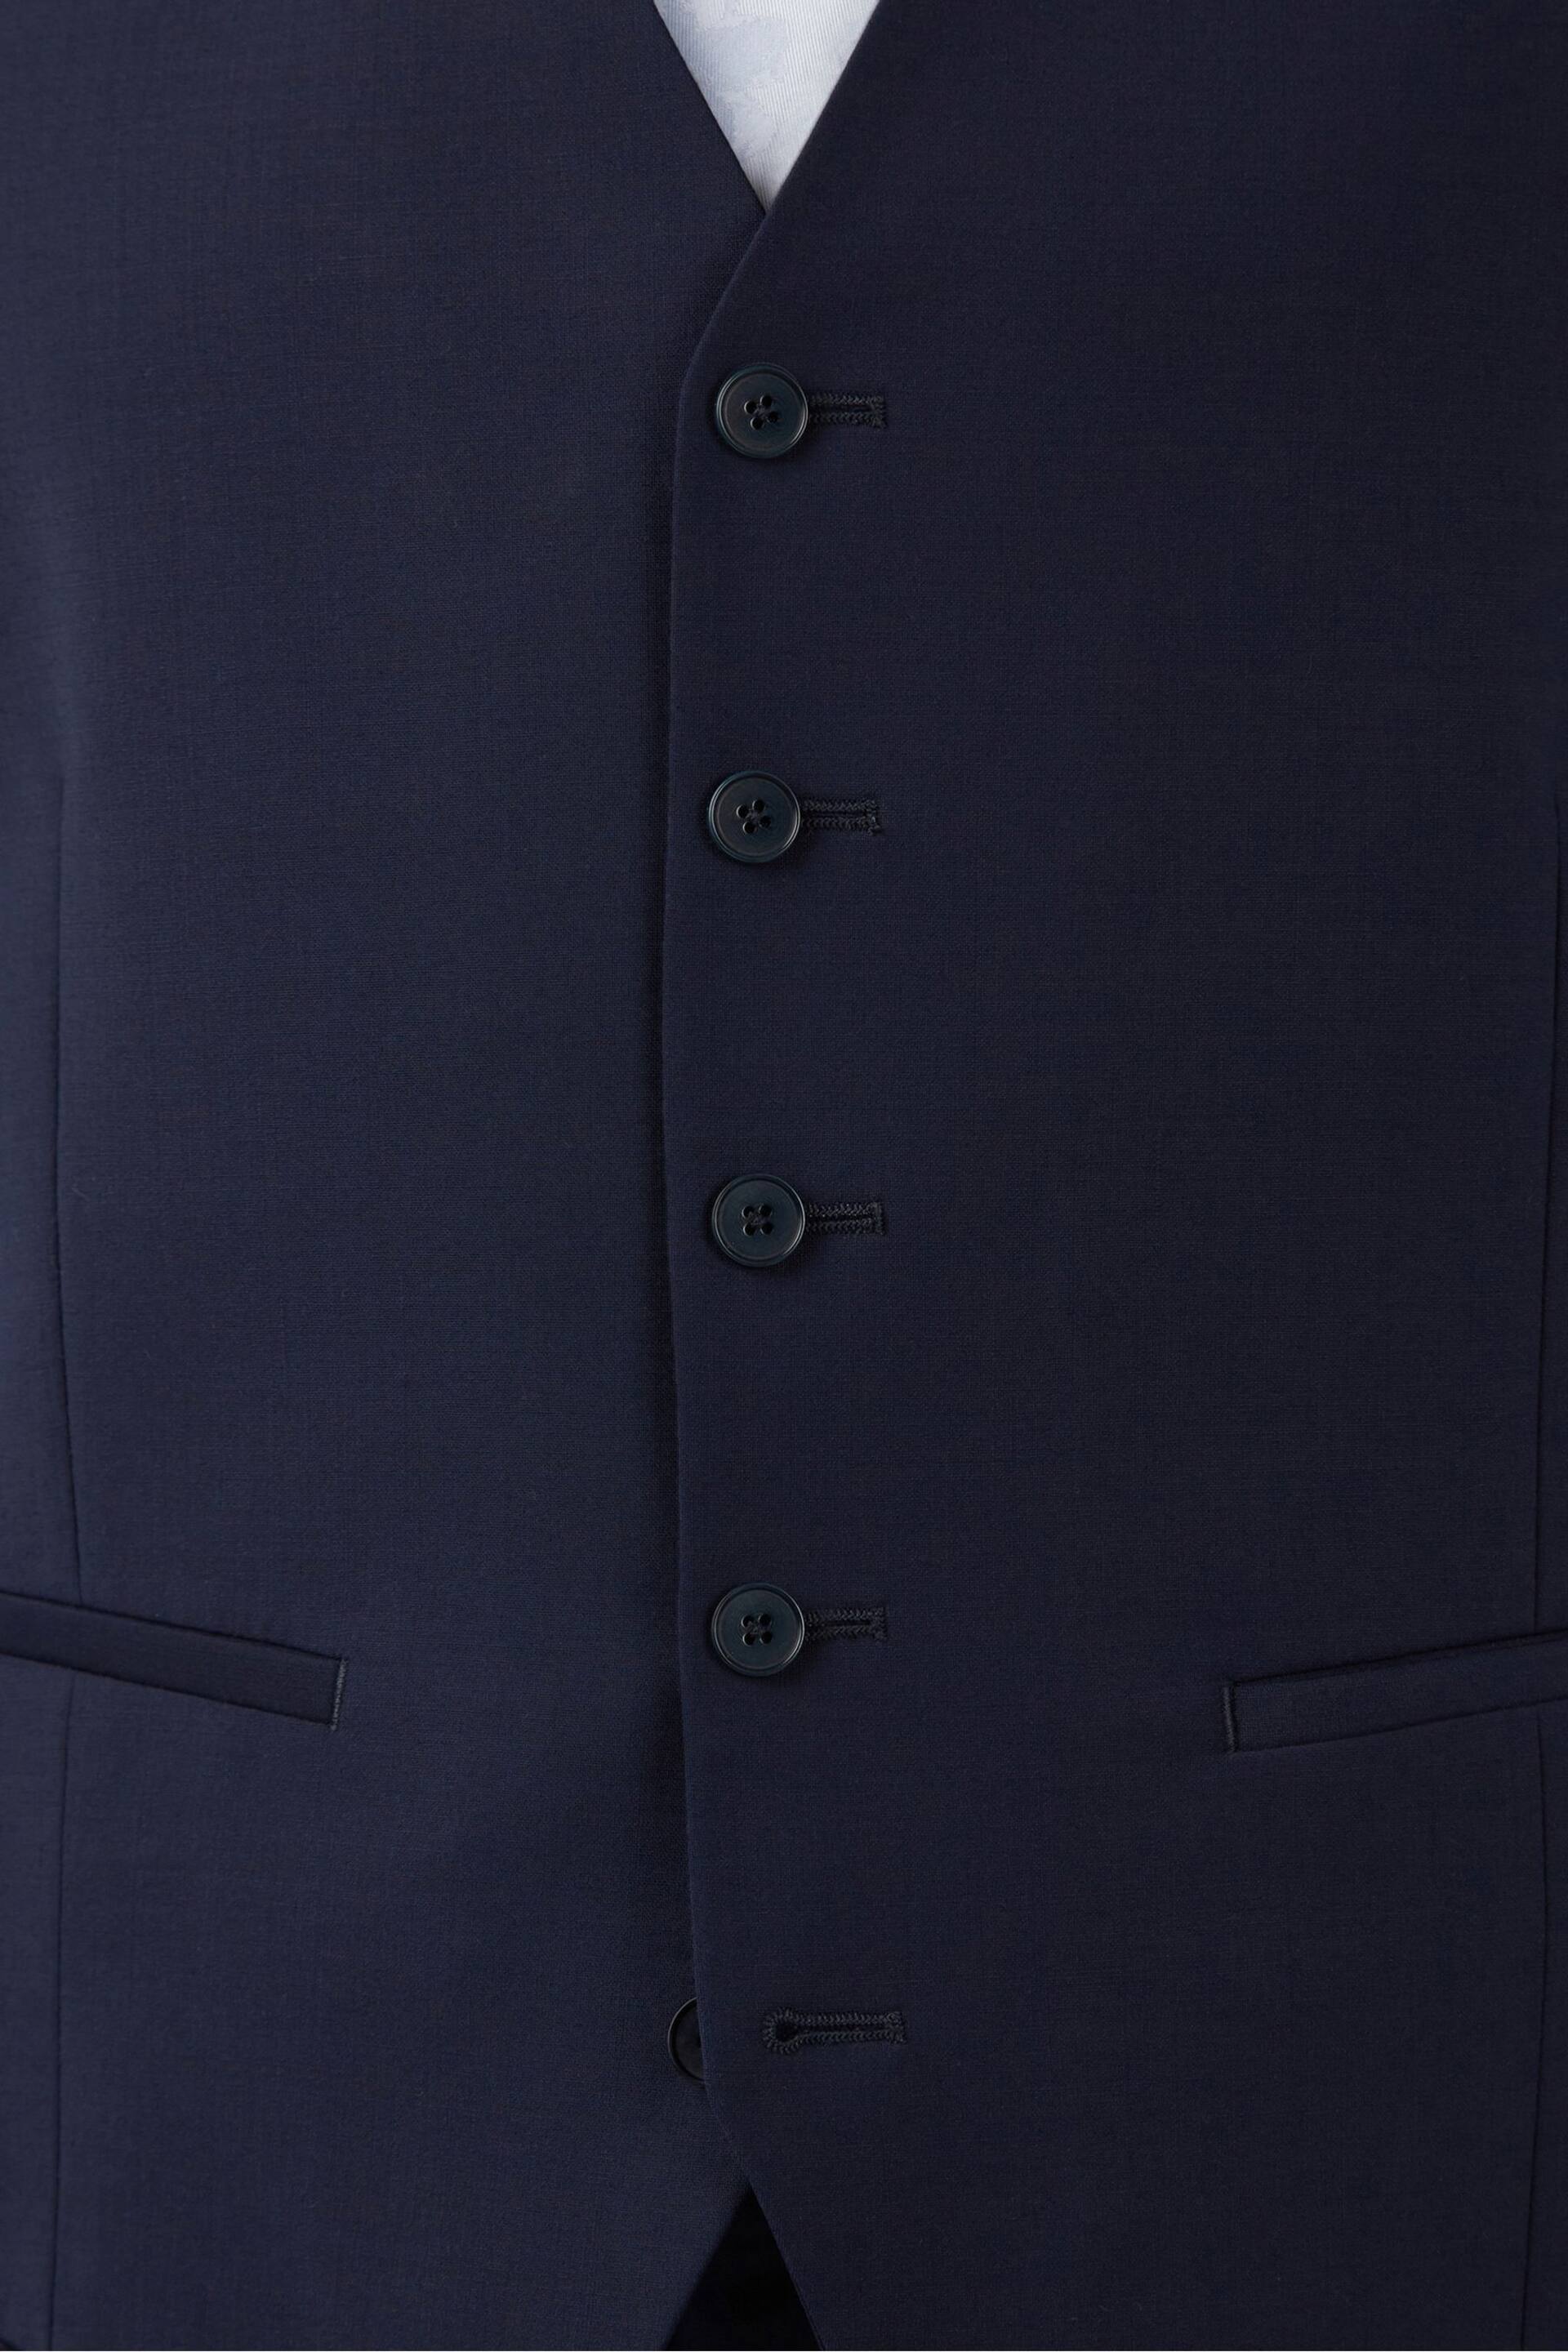 Ted Baker Navy Blue Premium Panama Suit Waistcoat - Image 3 of 4